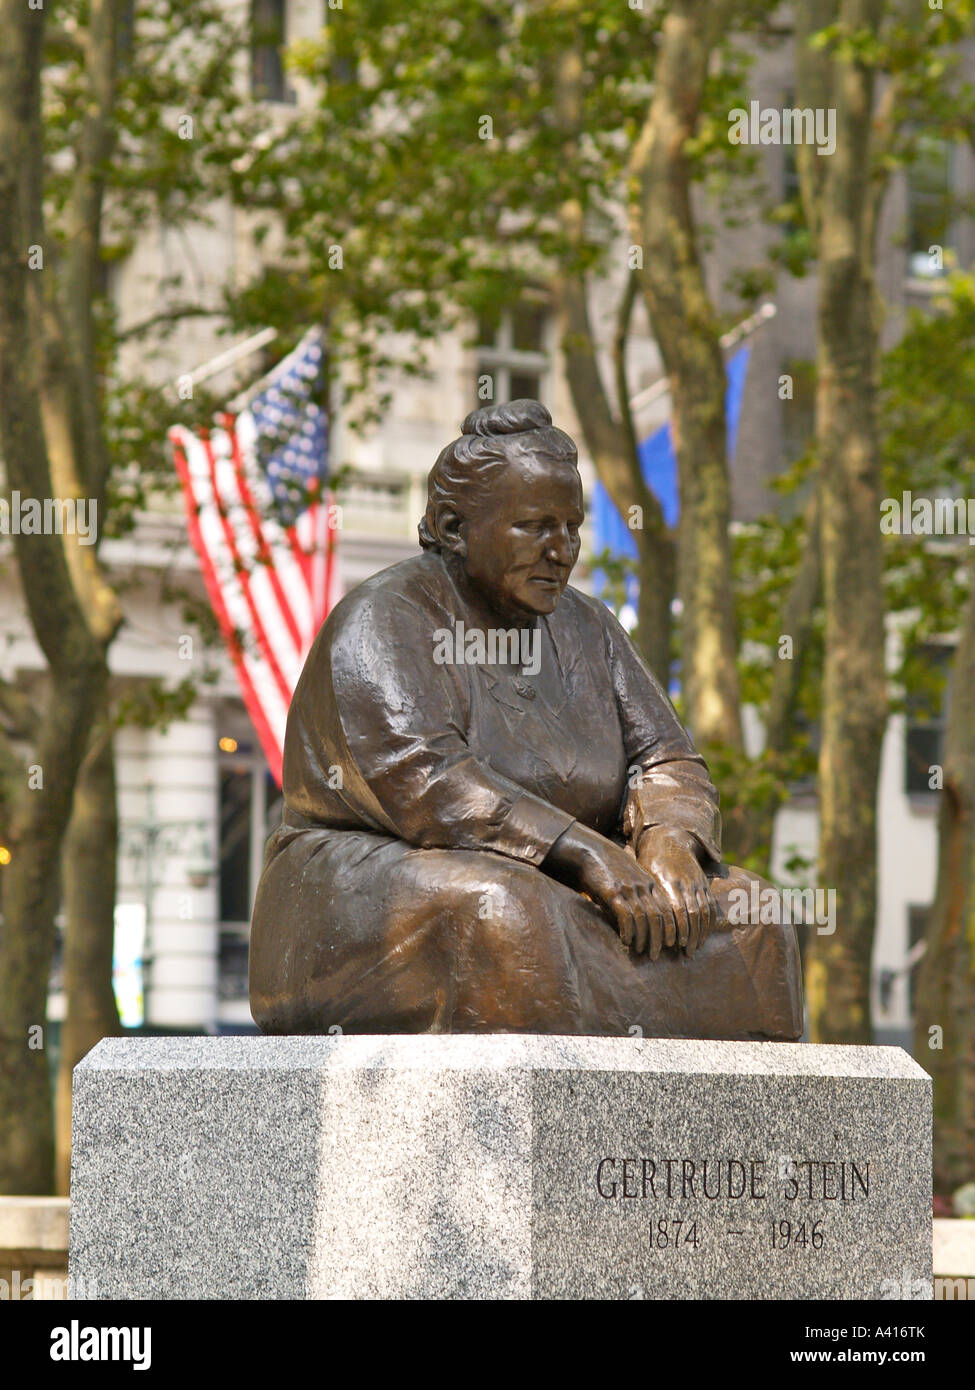 The statue of Gertrude Stein in Bryant Park Manhattan New York City USA Stock Photo